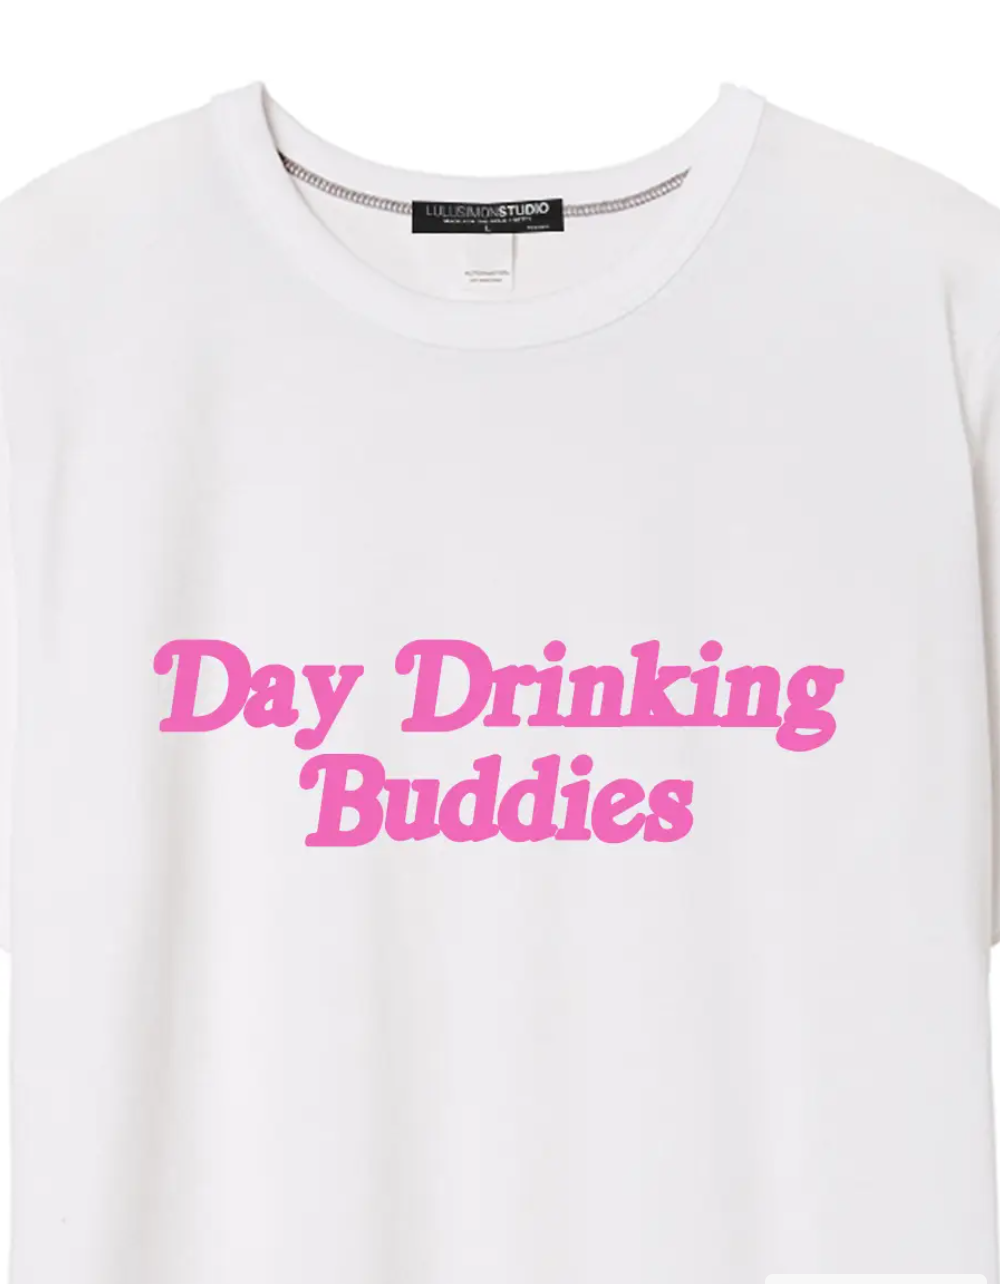 Day Drinking Buddies Tee